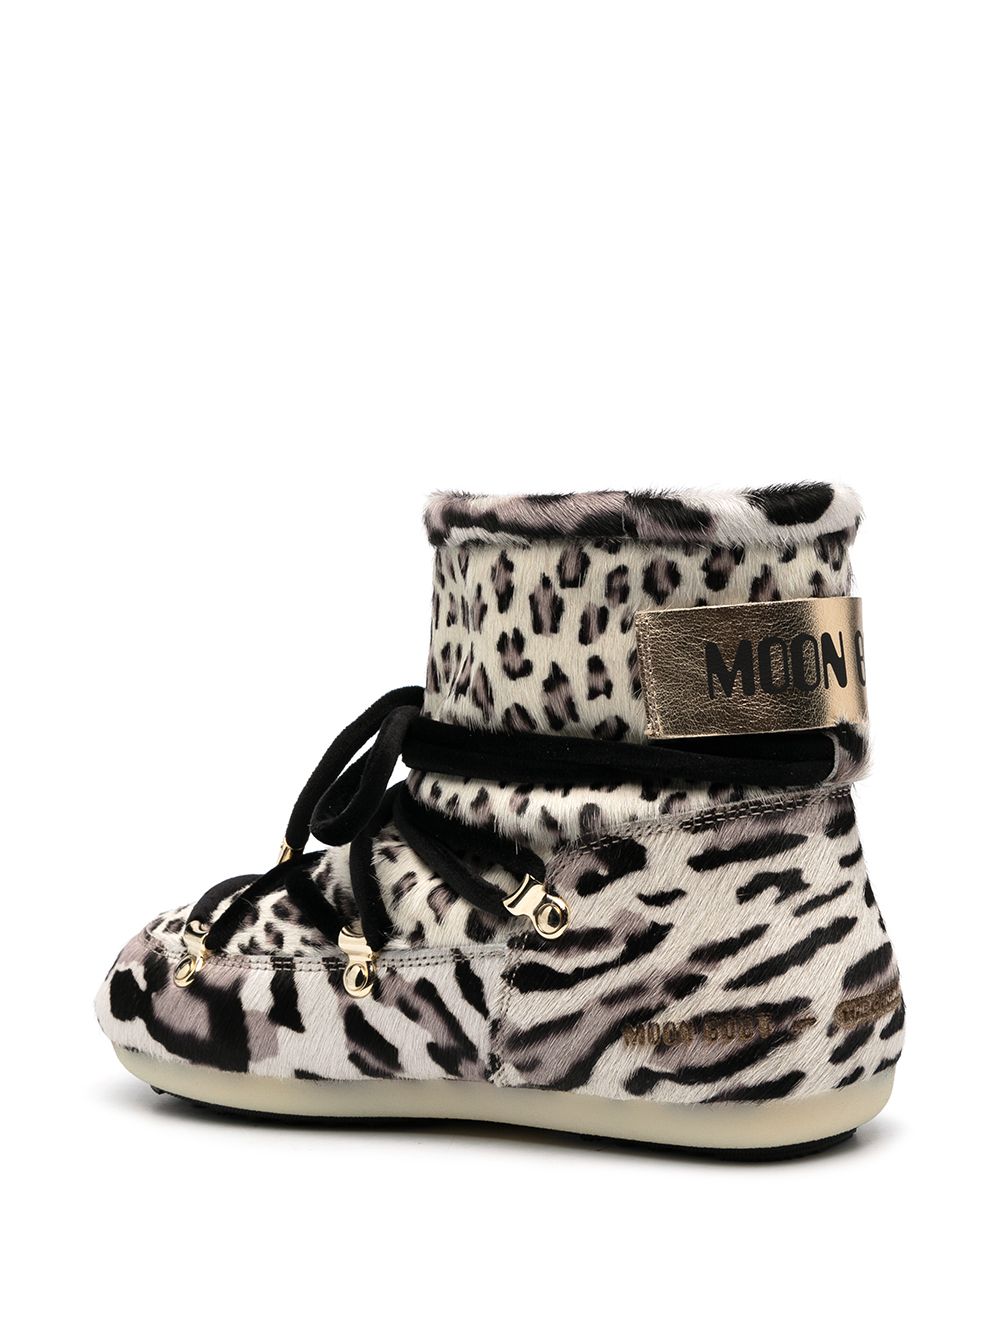 фото Moon boot зимние ботинки с леопардовым узором